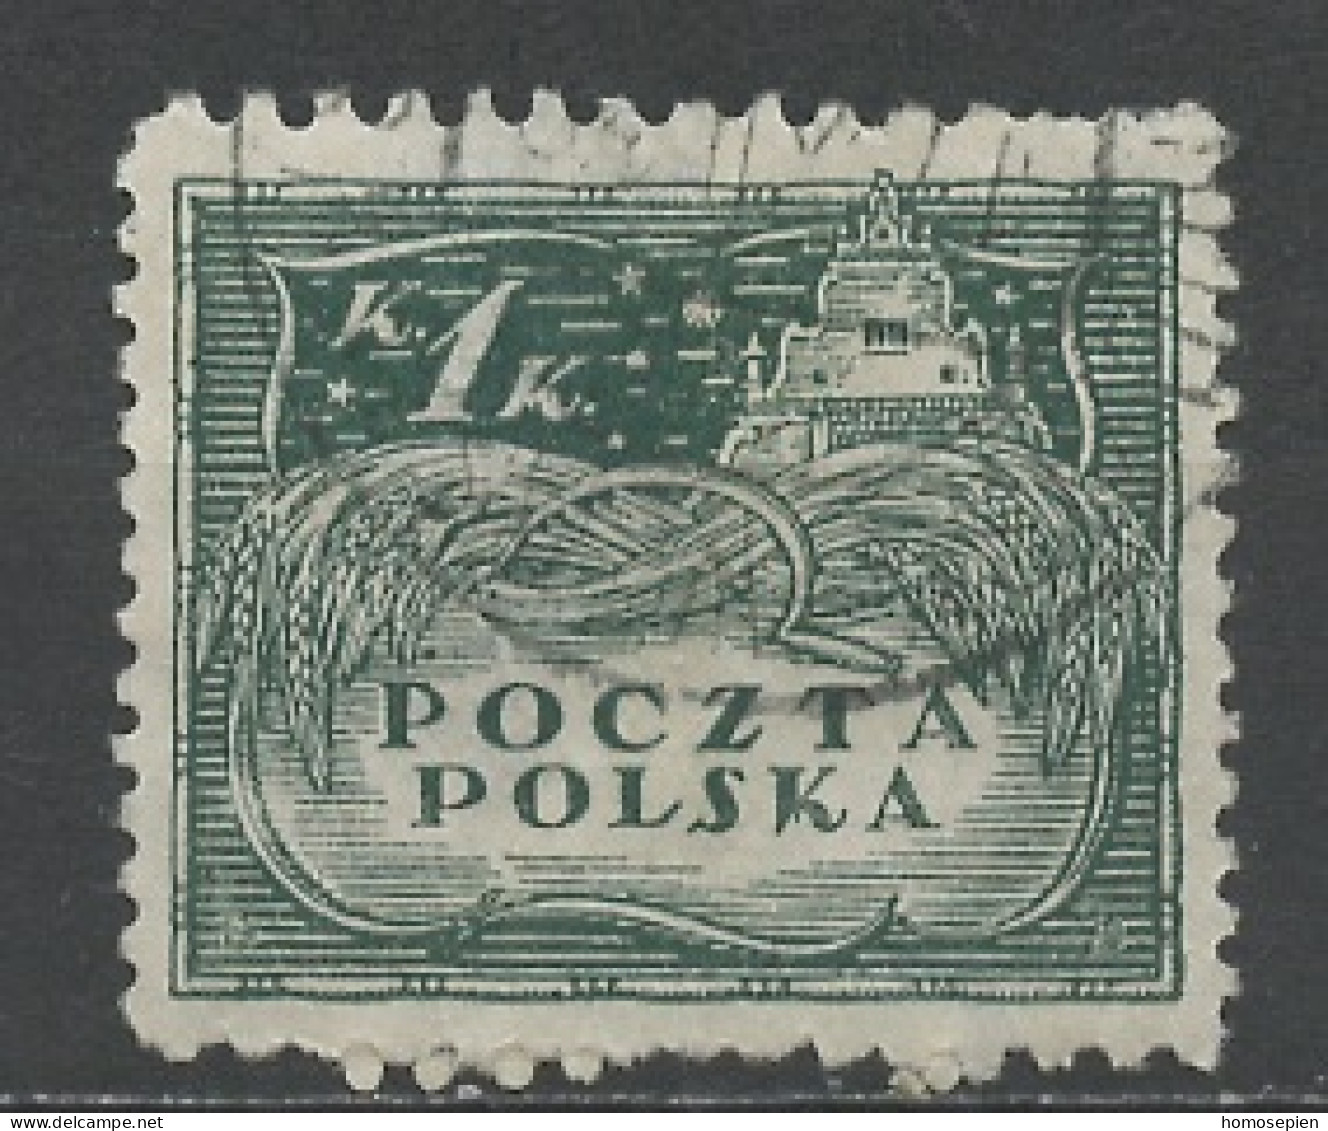 Pologne - Poland - Polen 1919 Y&T N°191 - Michel N°84 (o) - 1k Symbole De L'agriculture - Gebraucht